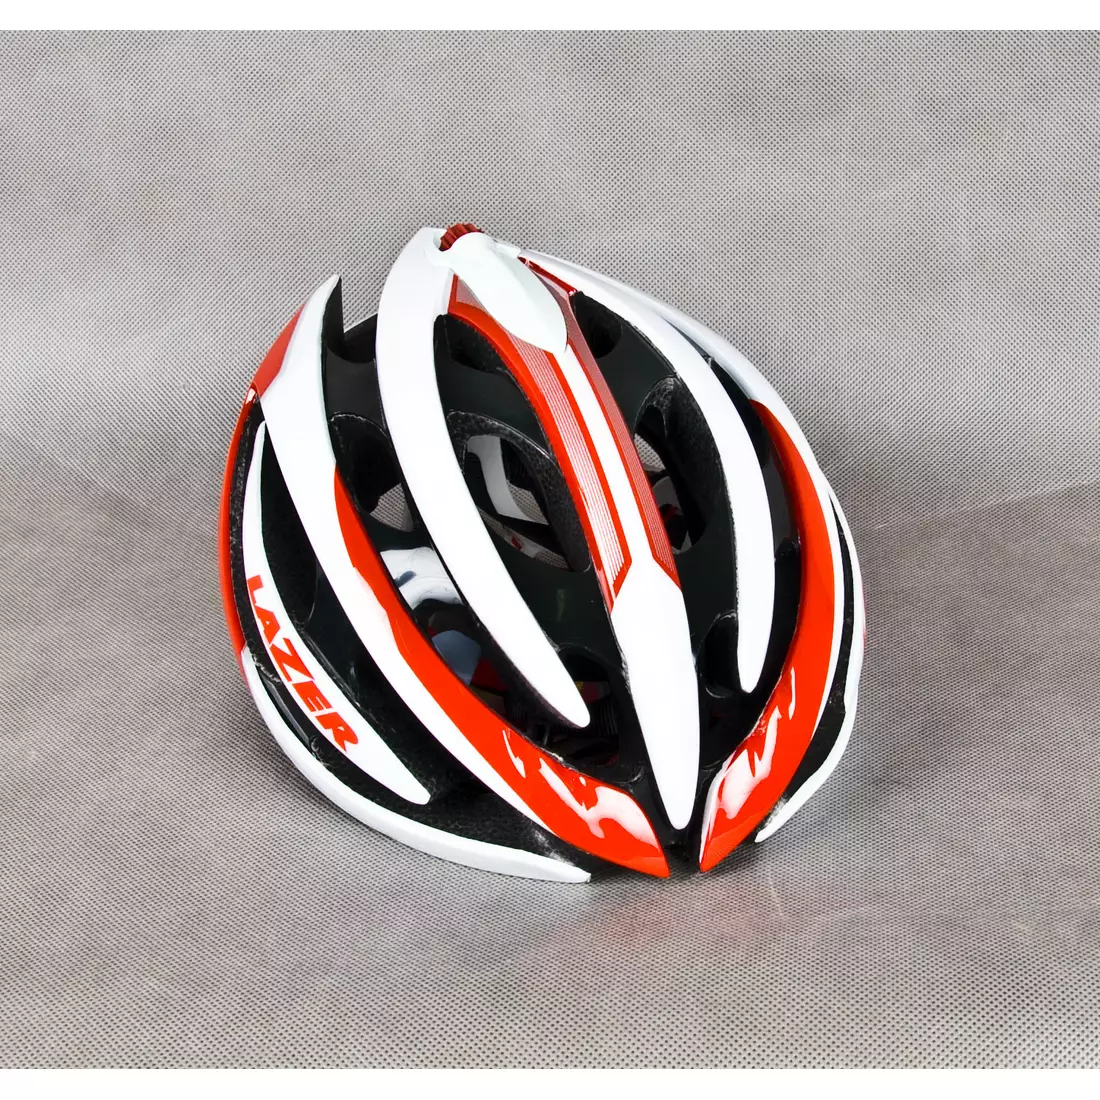 LAZER GENESIS bicycle helmet, road, white and red